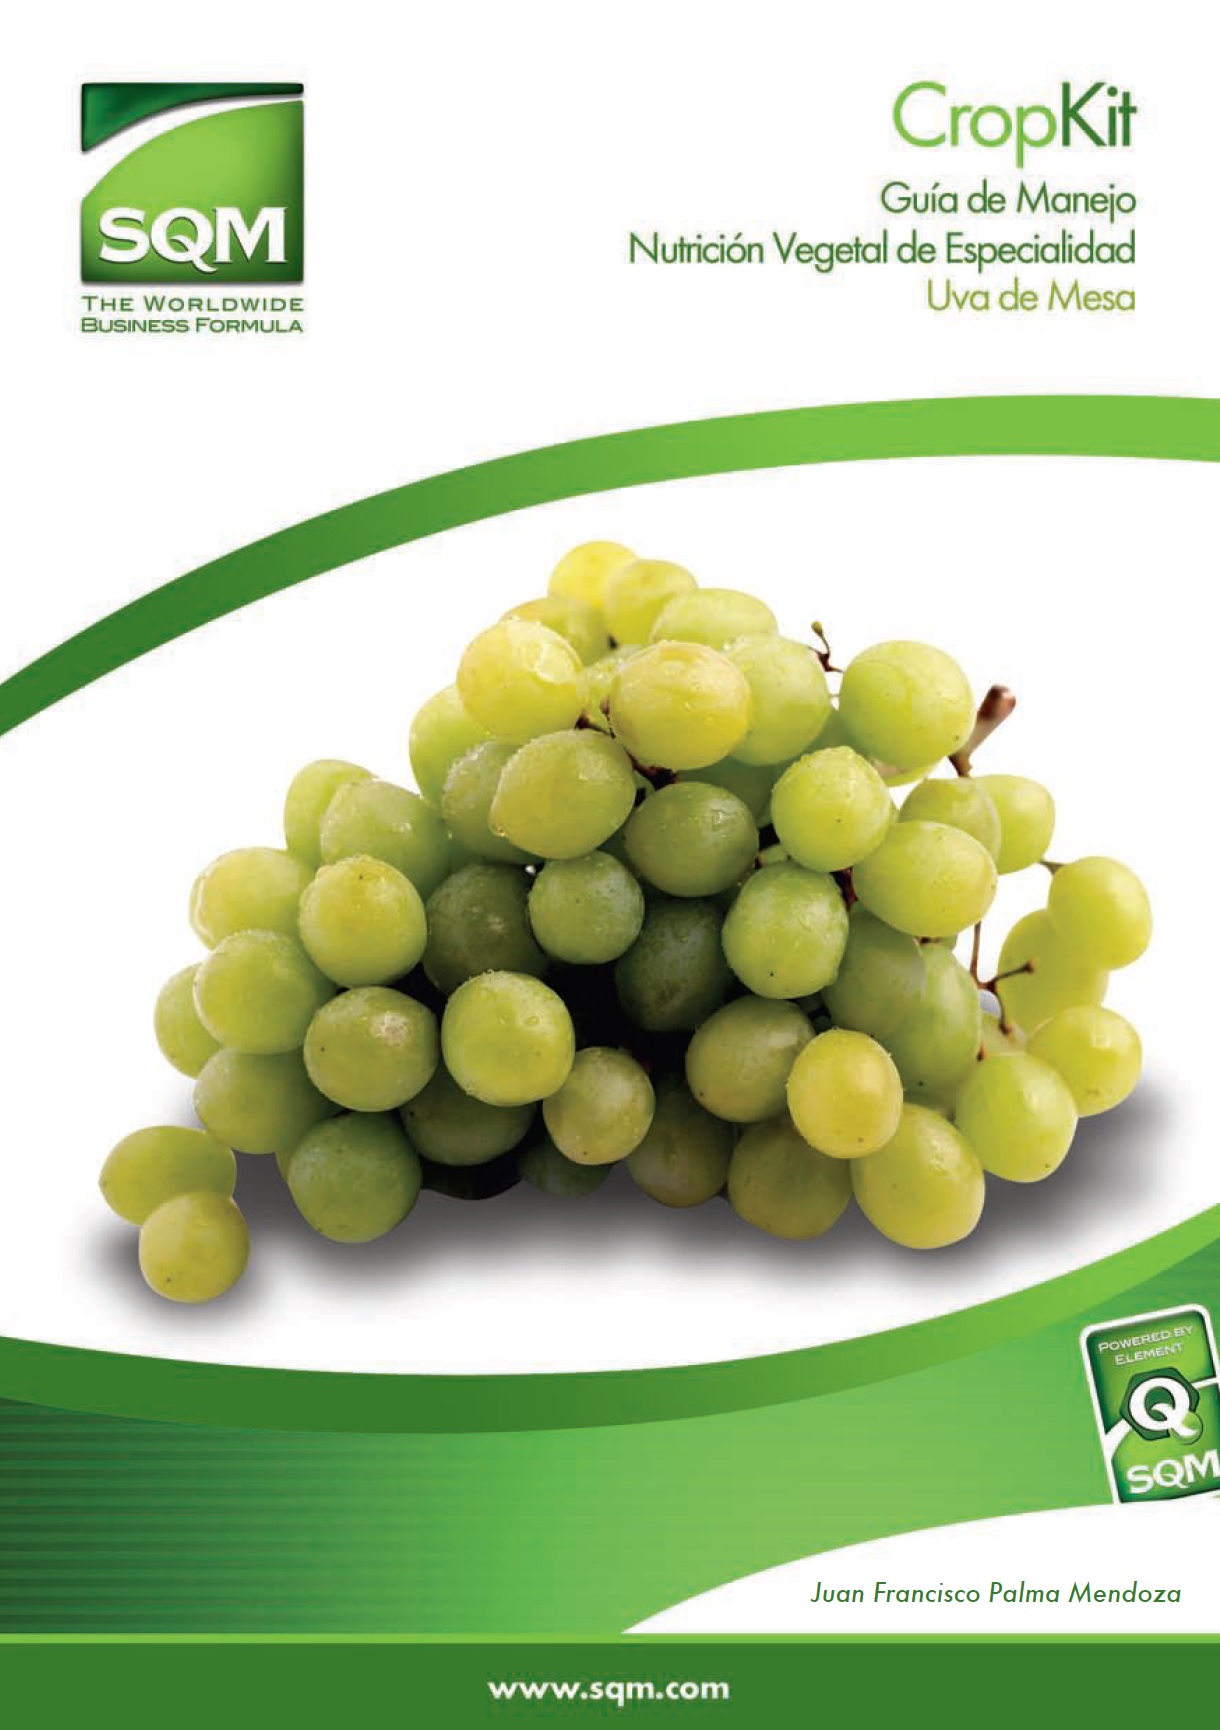 Crop Kit uva de mesa